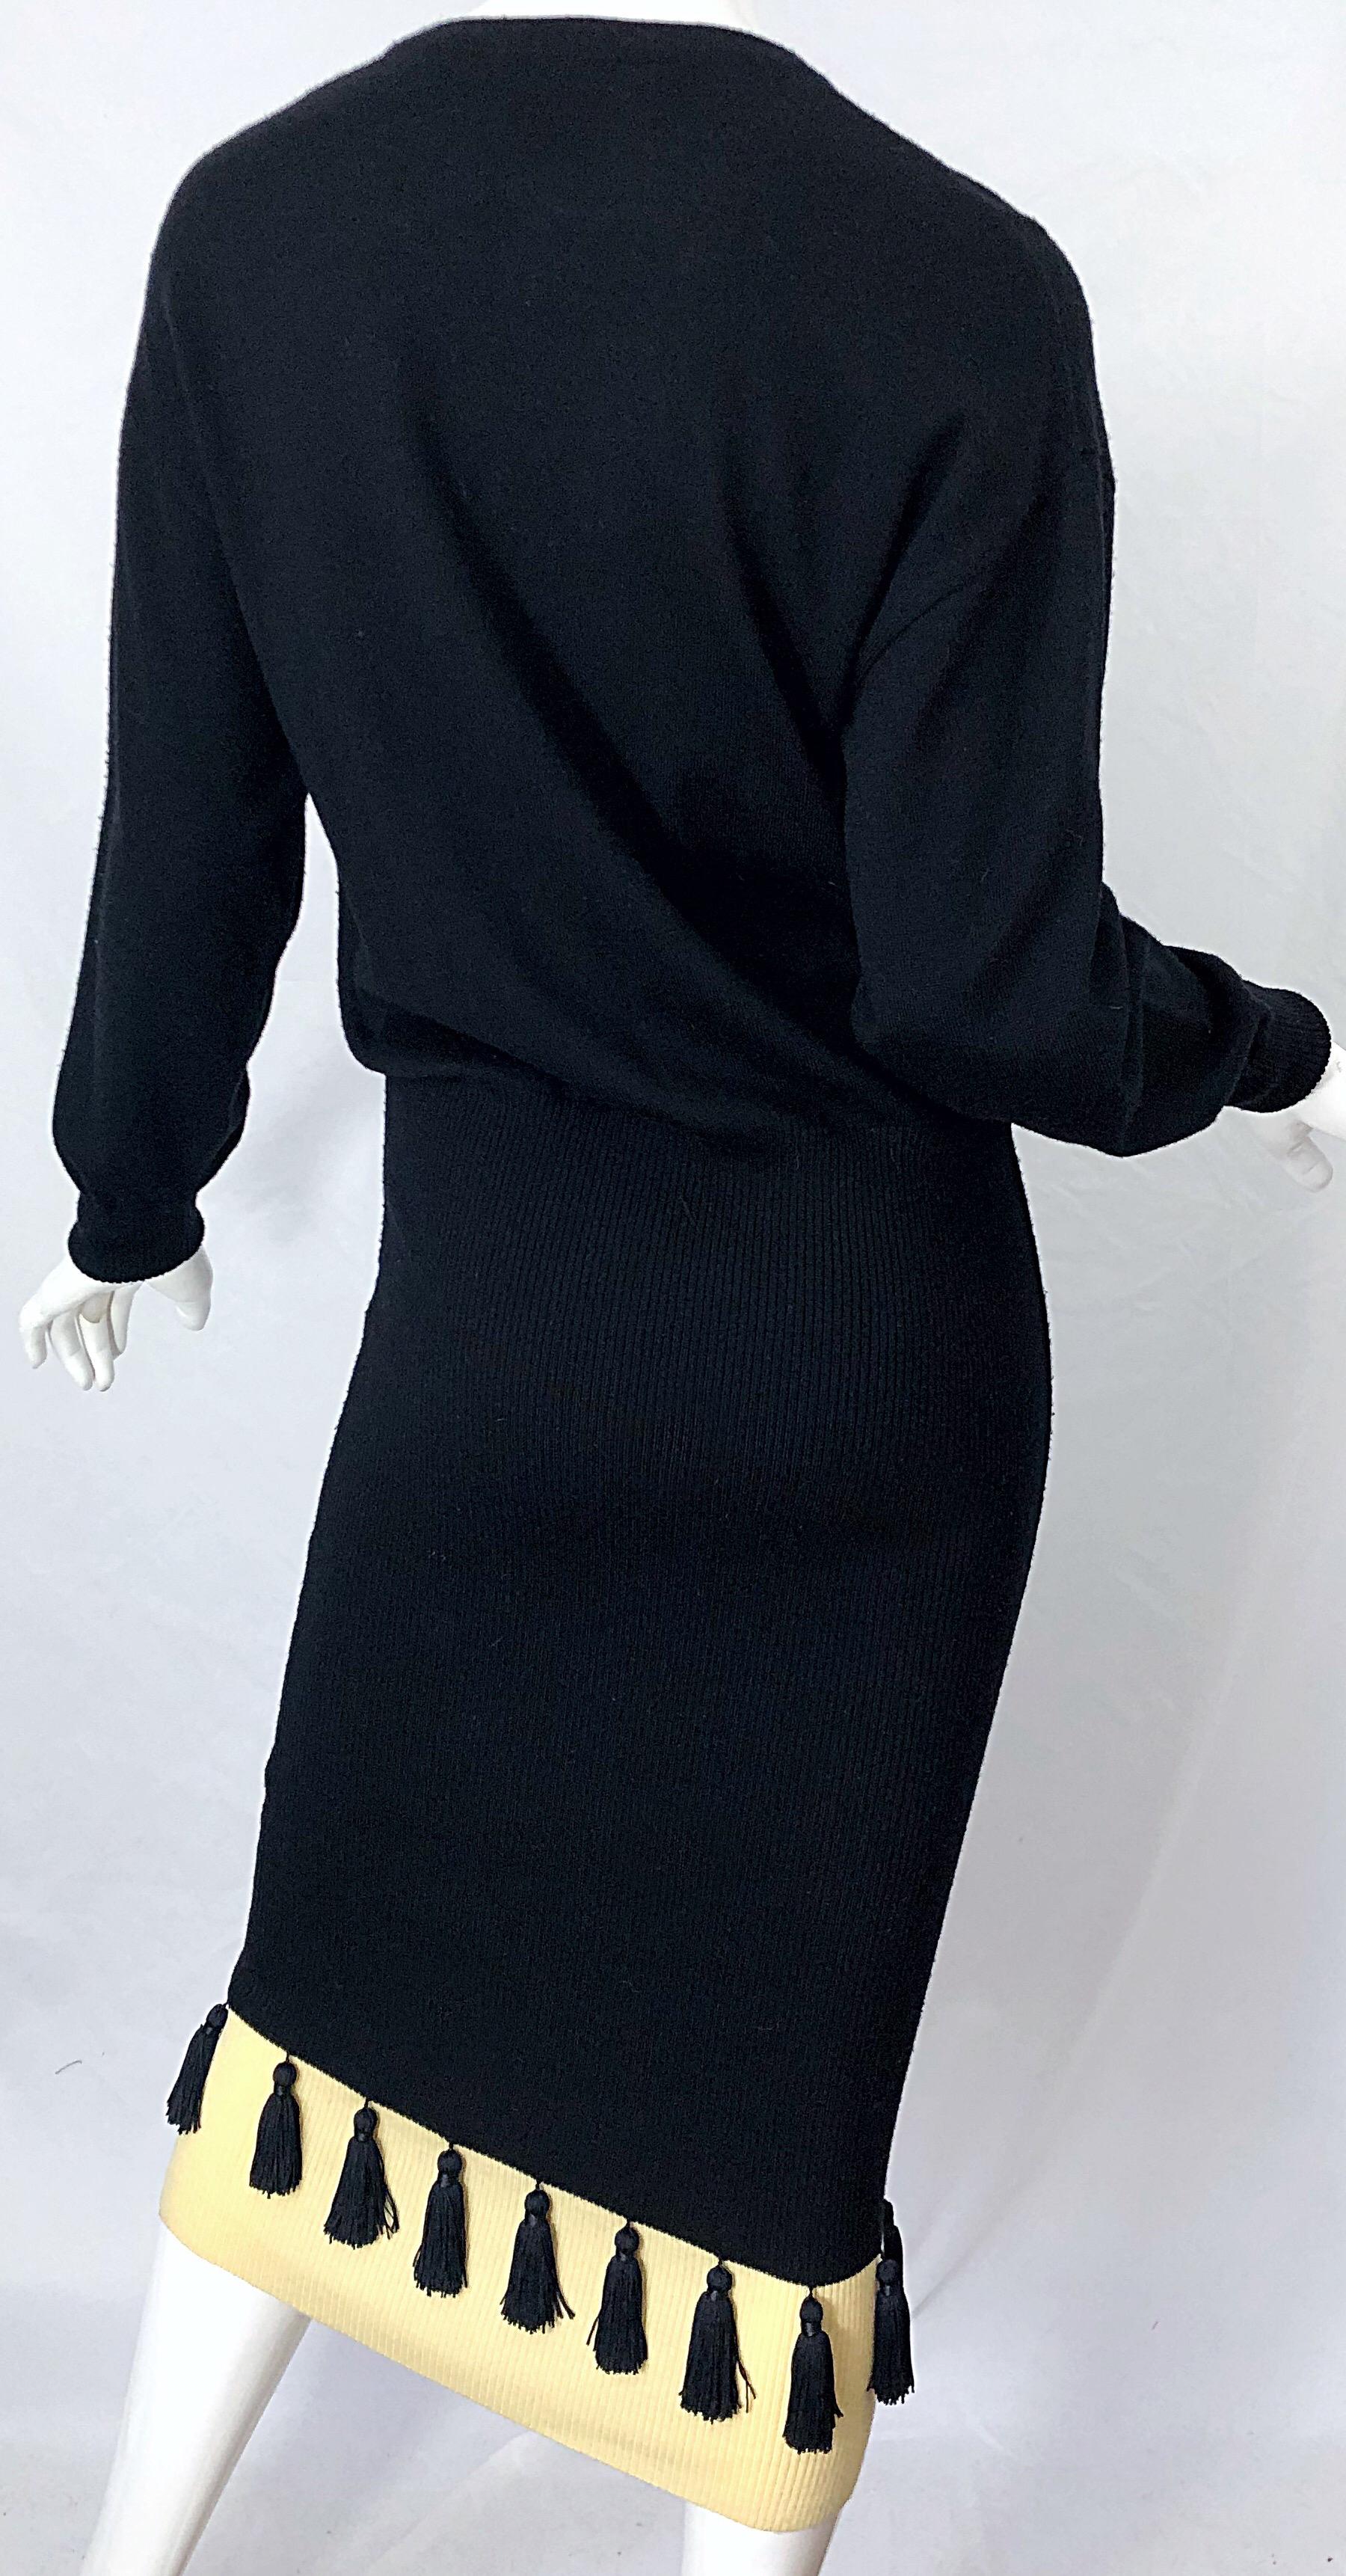 Women's 1980s Angelo Tarlazzi Black and Ivory Wool Dolman Sleeve 80s Sweater Dress For Sale